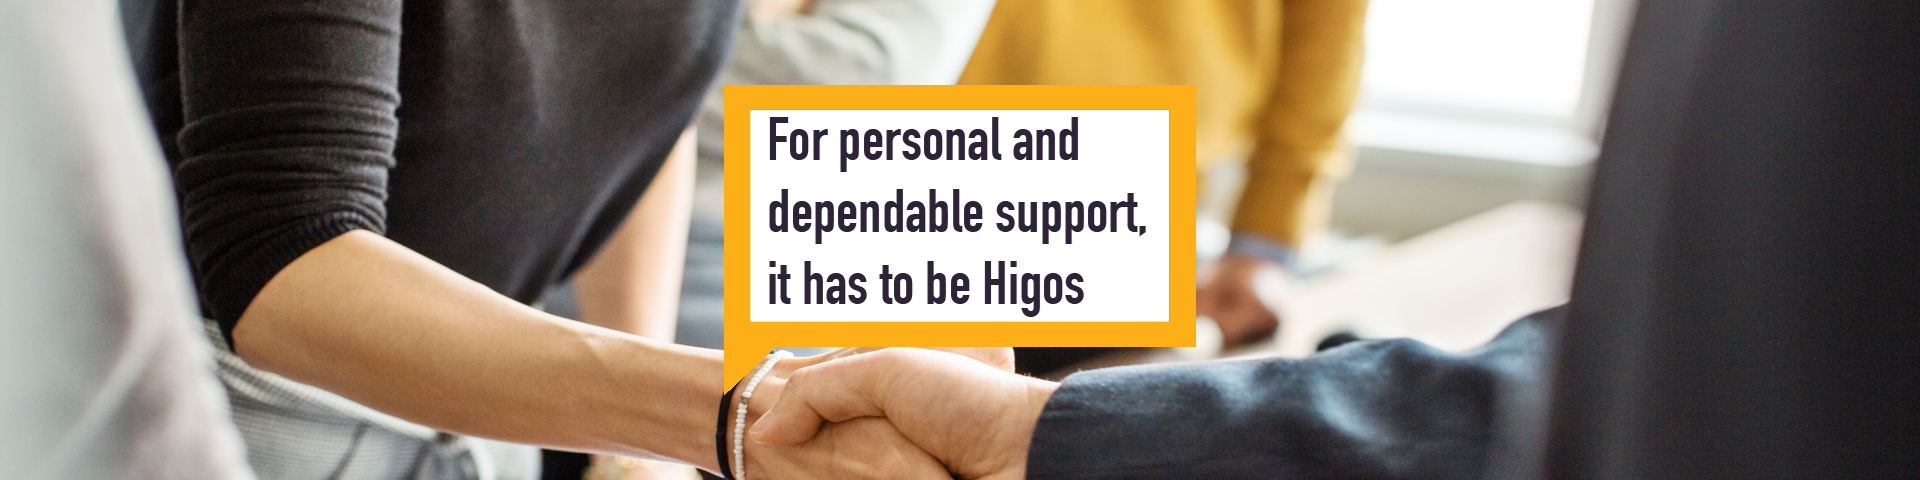 Higos contact our agency team